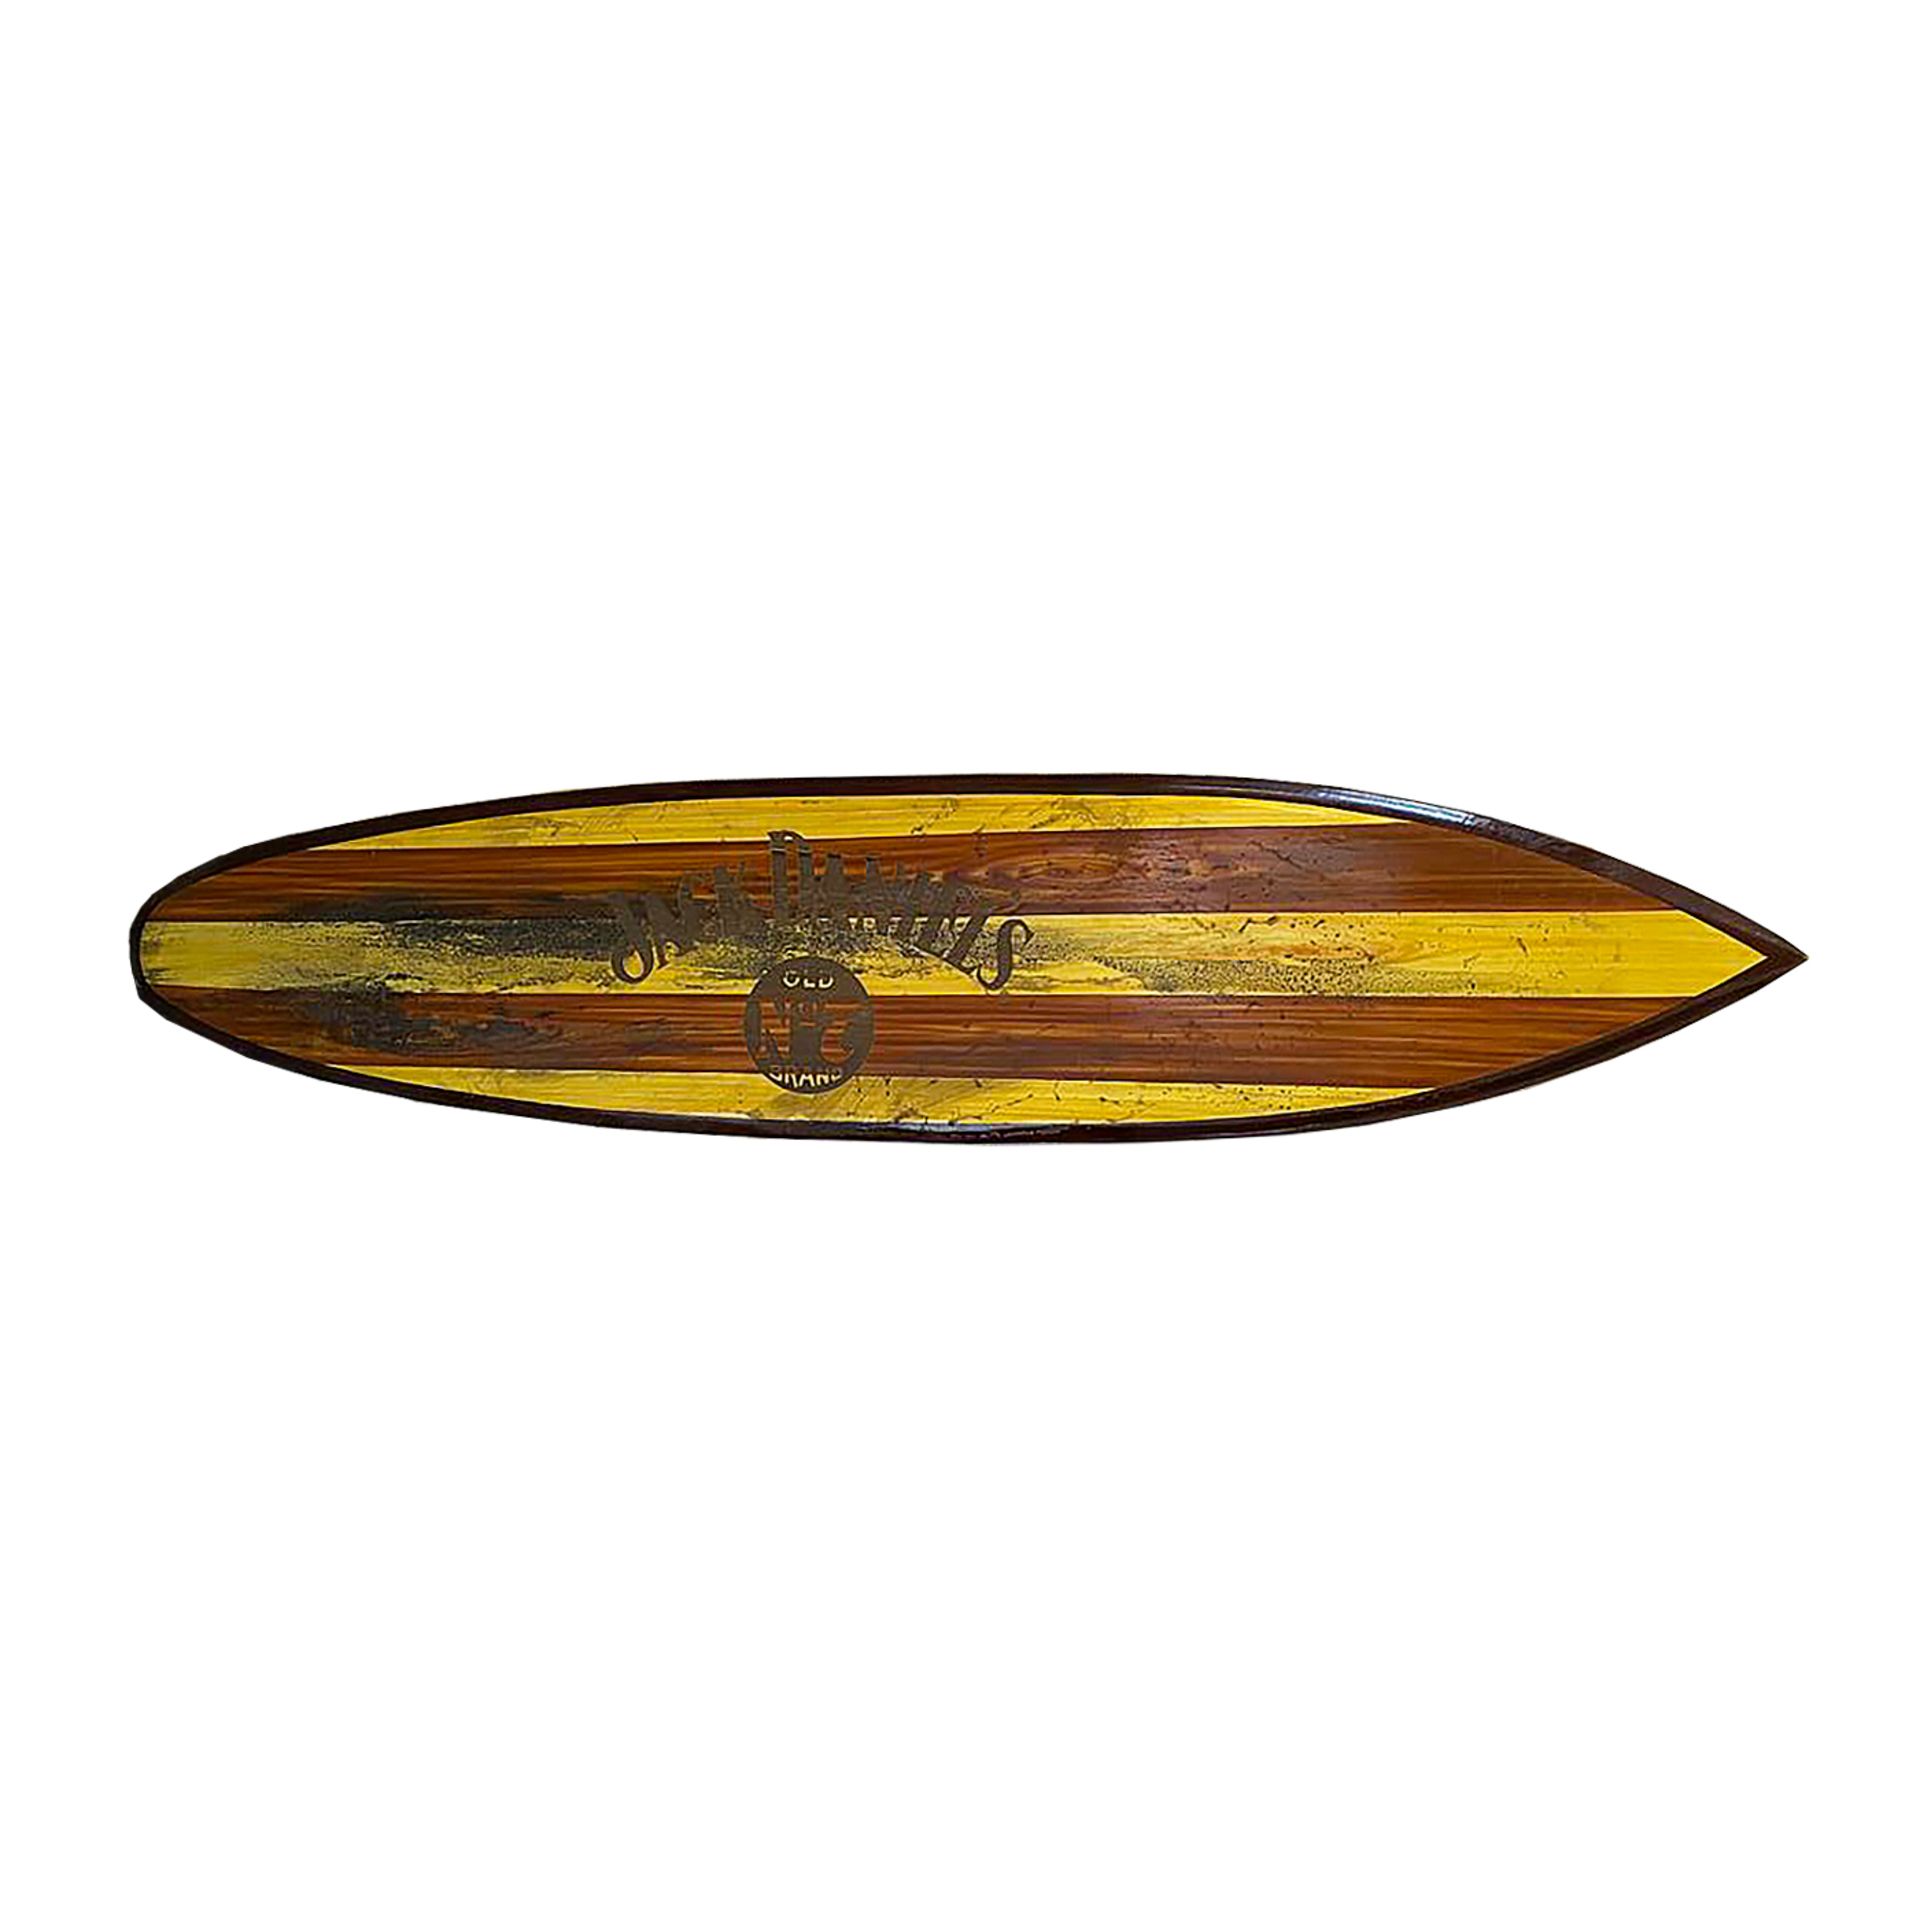 Jack Daniels Advertisement in the Shape of a Wooden Surfboard